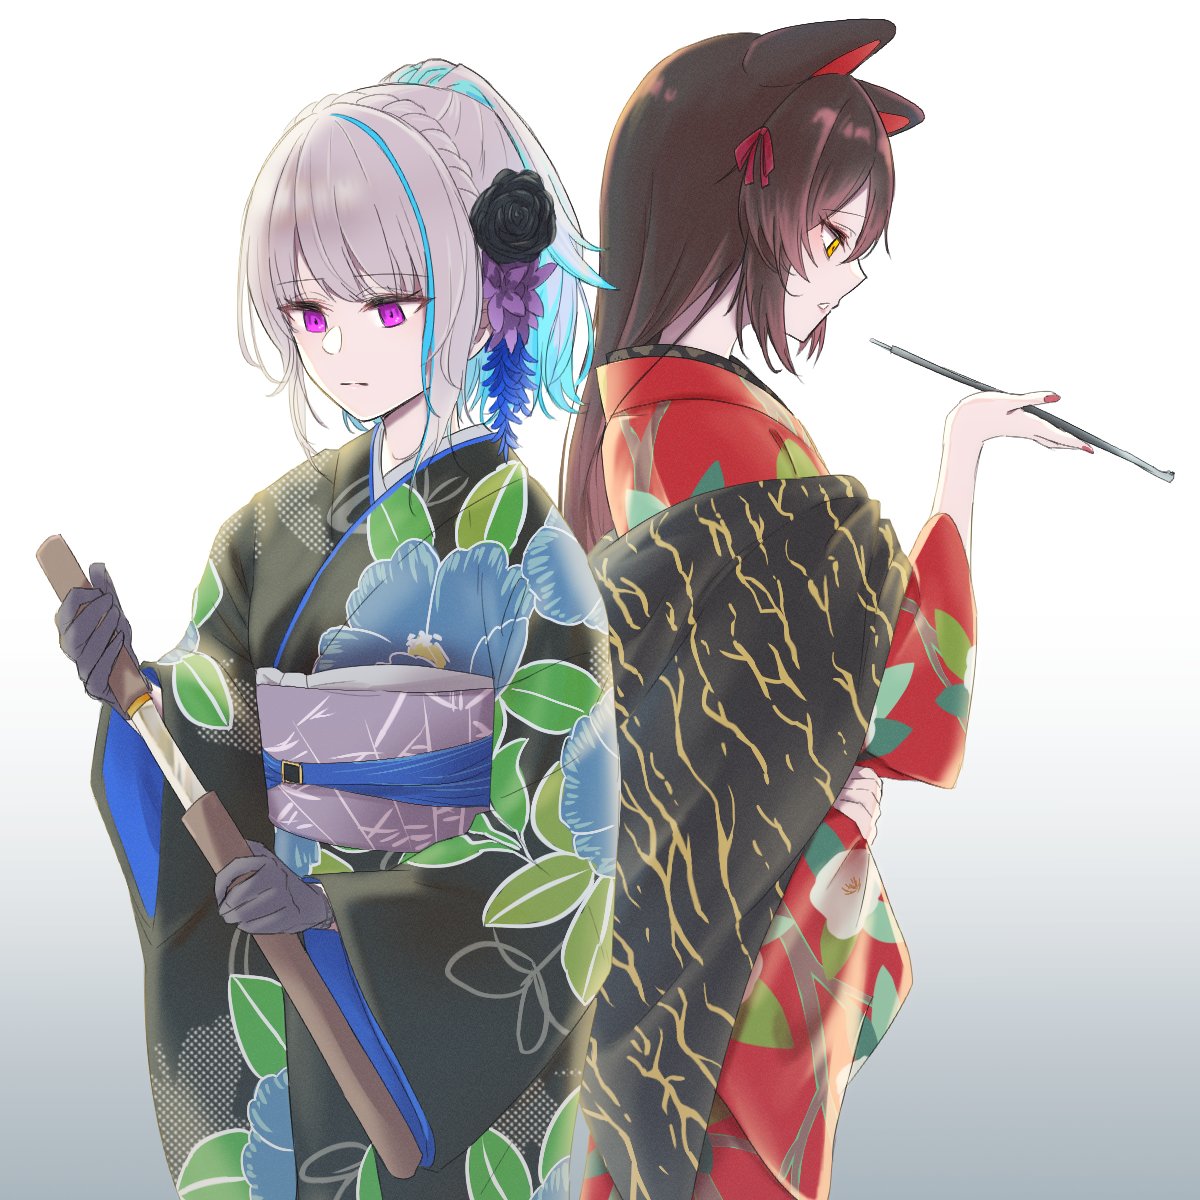 inui toko ,lize helesta multiple girls 2girls kimono japanese clothes brown hair animal ears dog ears  illustration images